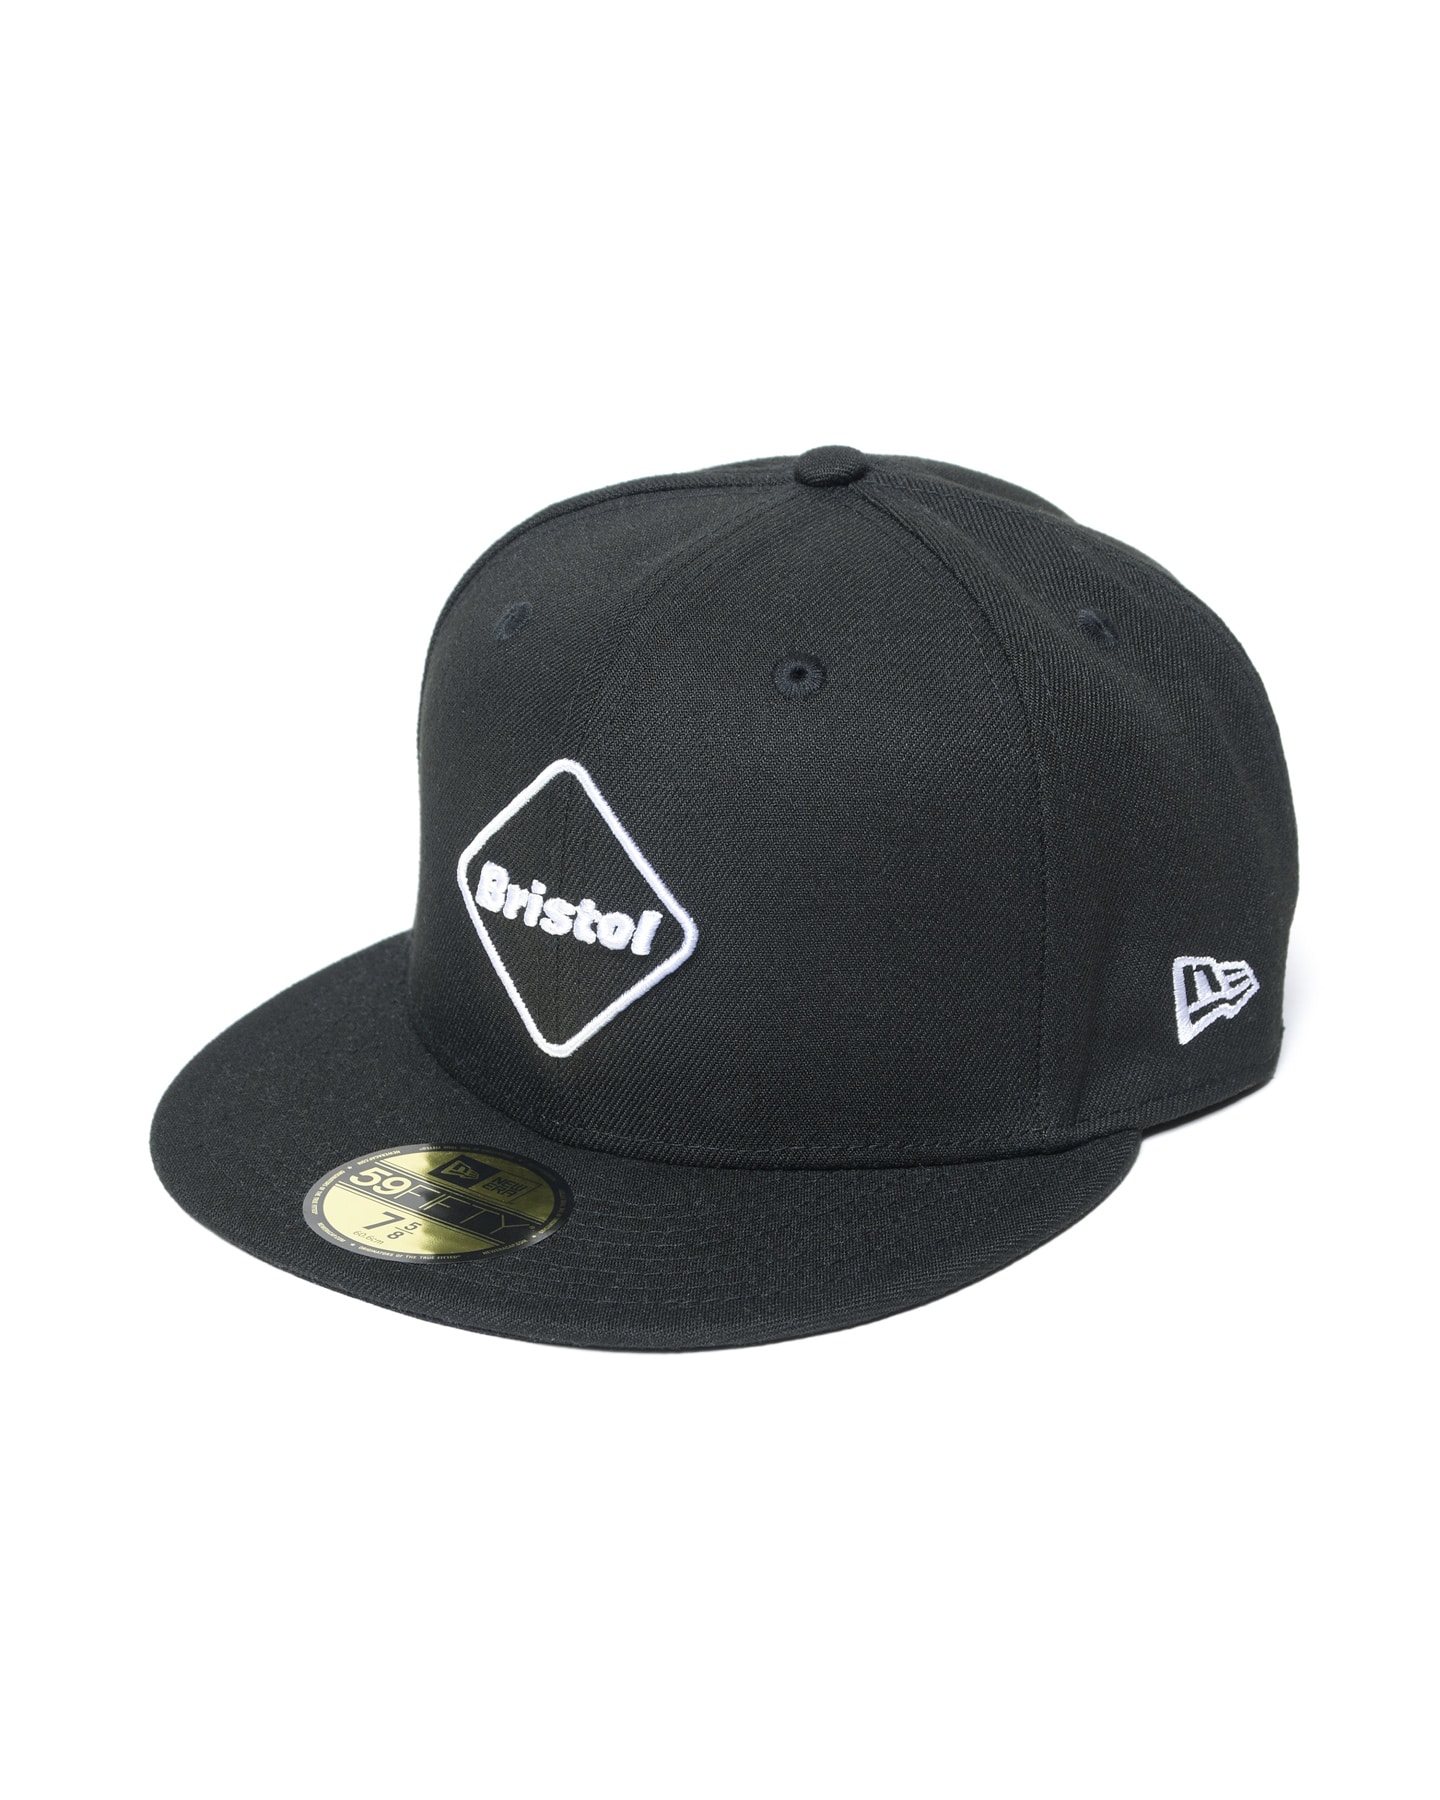 SOPH. | NEWERA EMBLEM 59FIFTY CAP(M (7 1/2) BLACK):